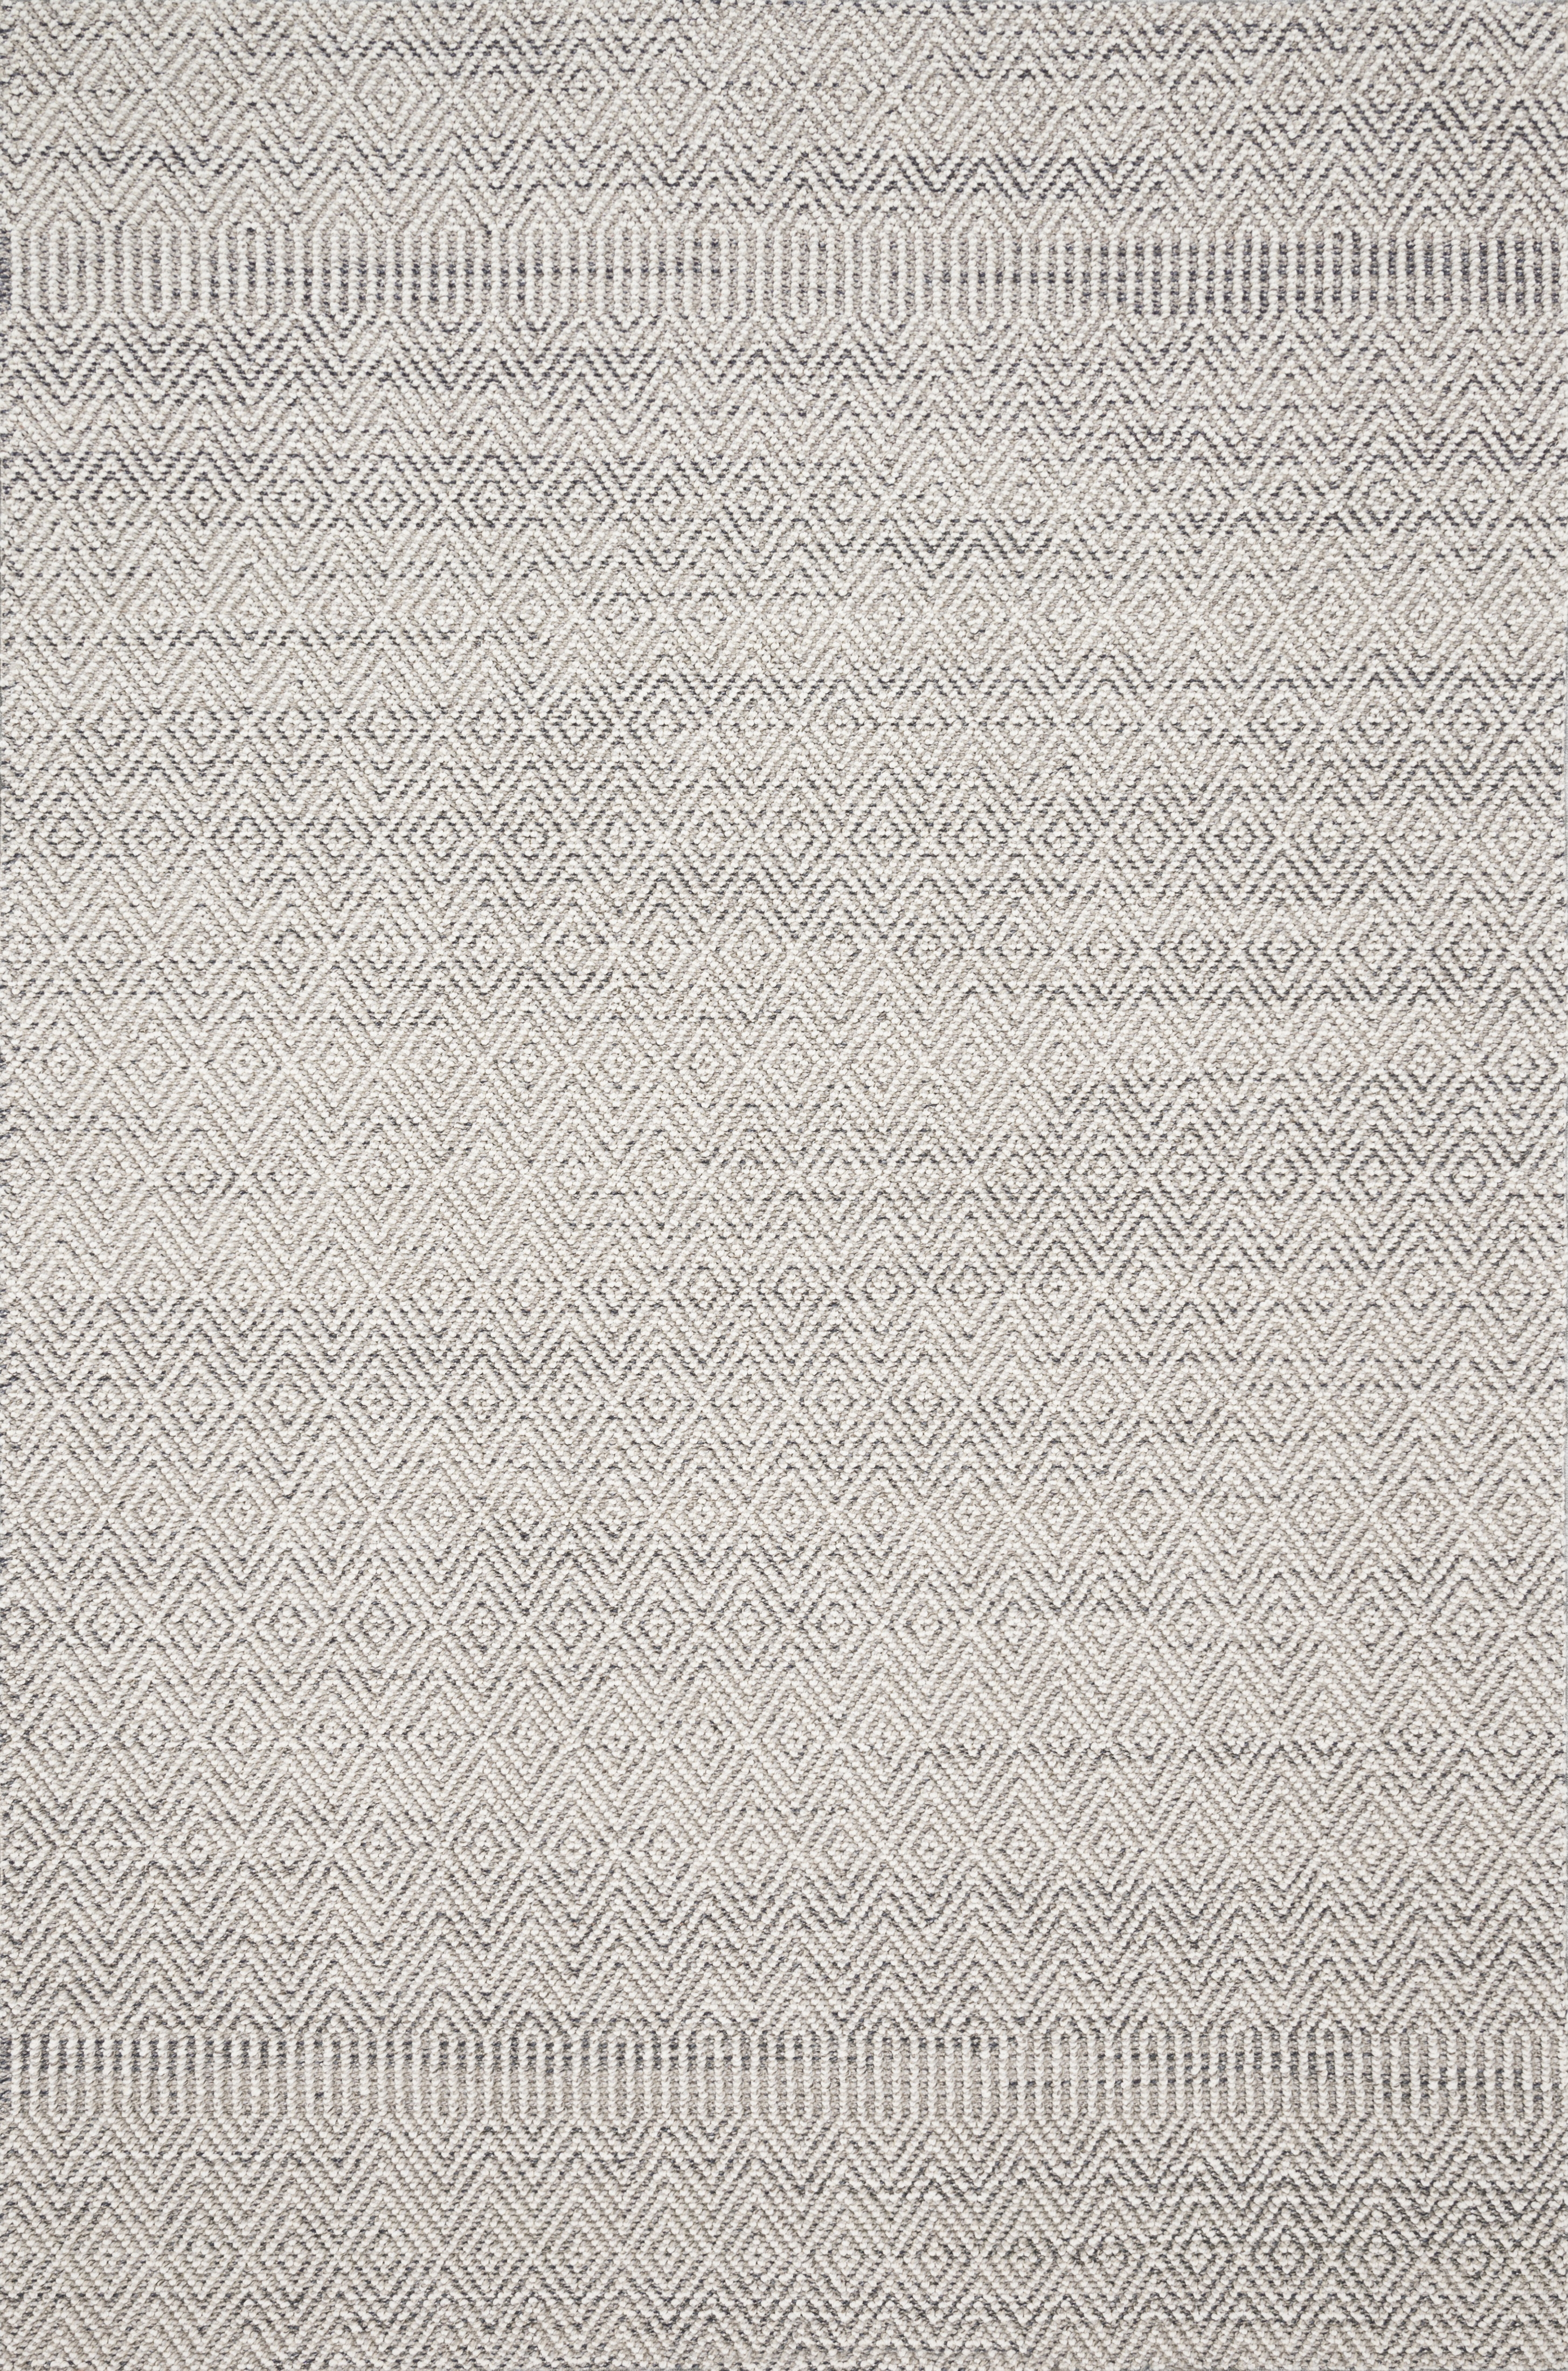 Loloi Cole COL-02 Grey / Bone 9'-6" x 12'-8" - Image 0